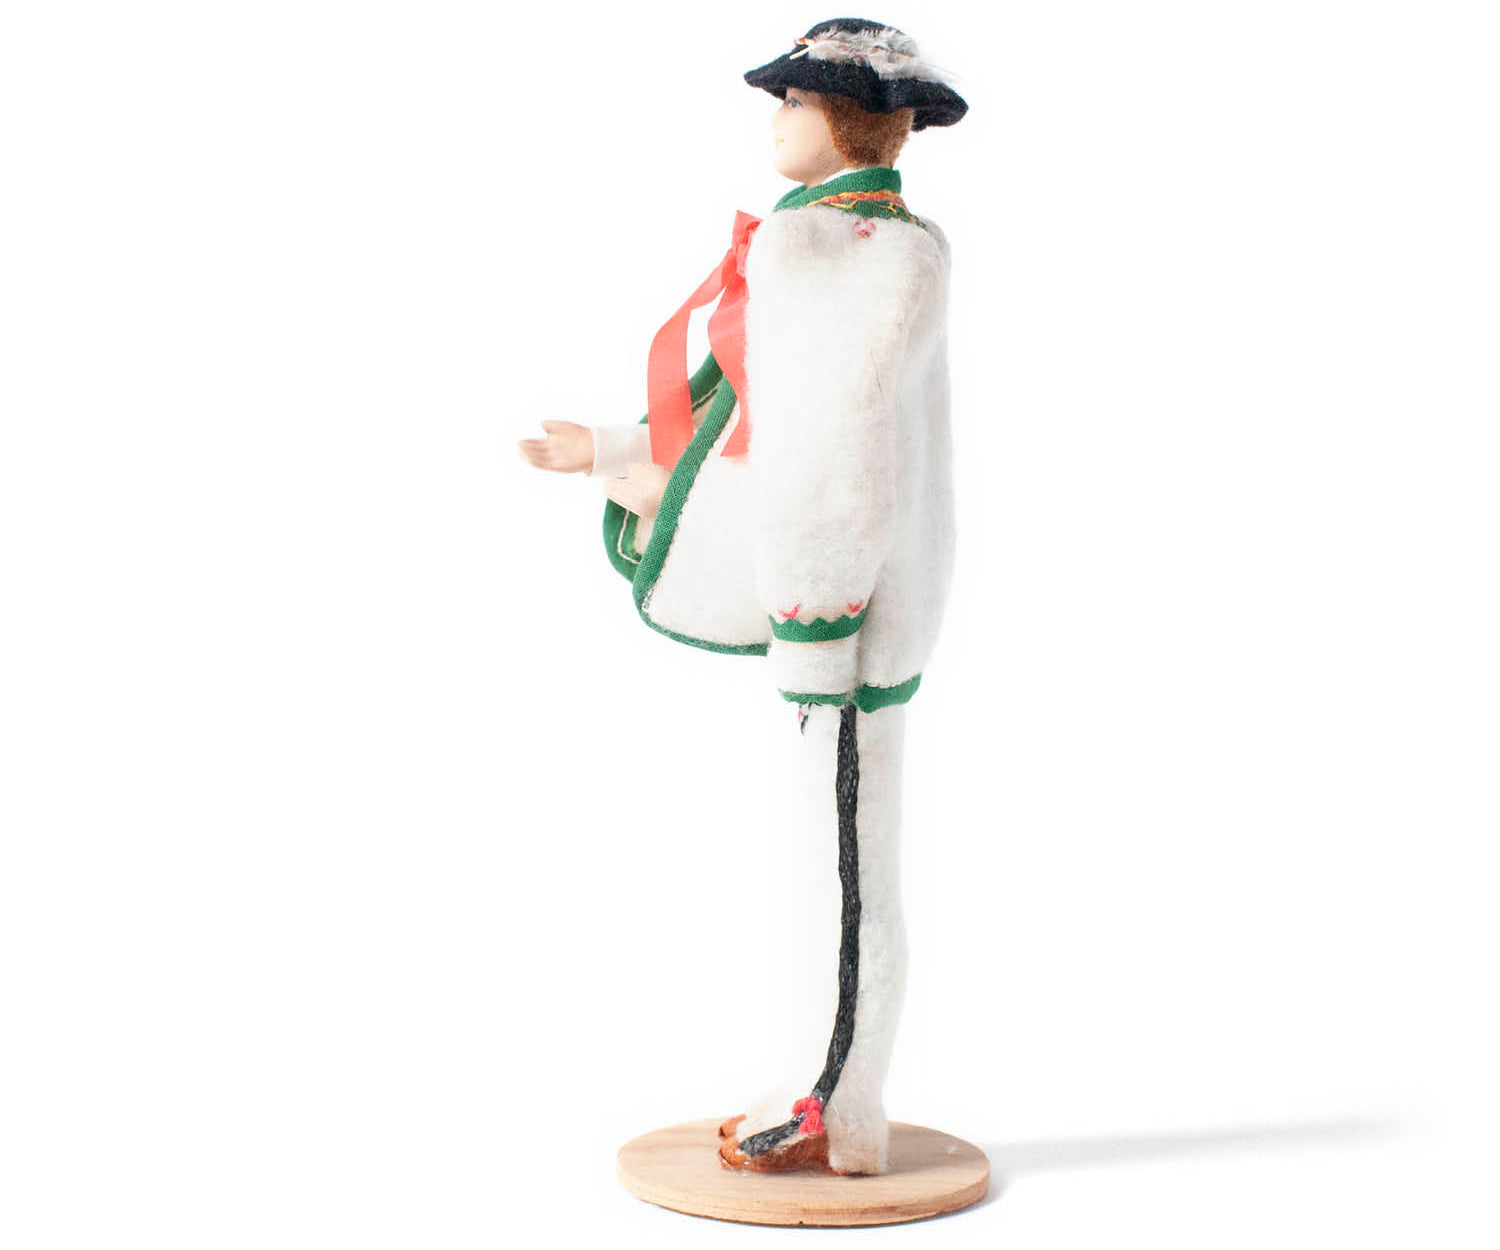 Vintage Object : ポーランドの人形 | LIKE THIS SHOP